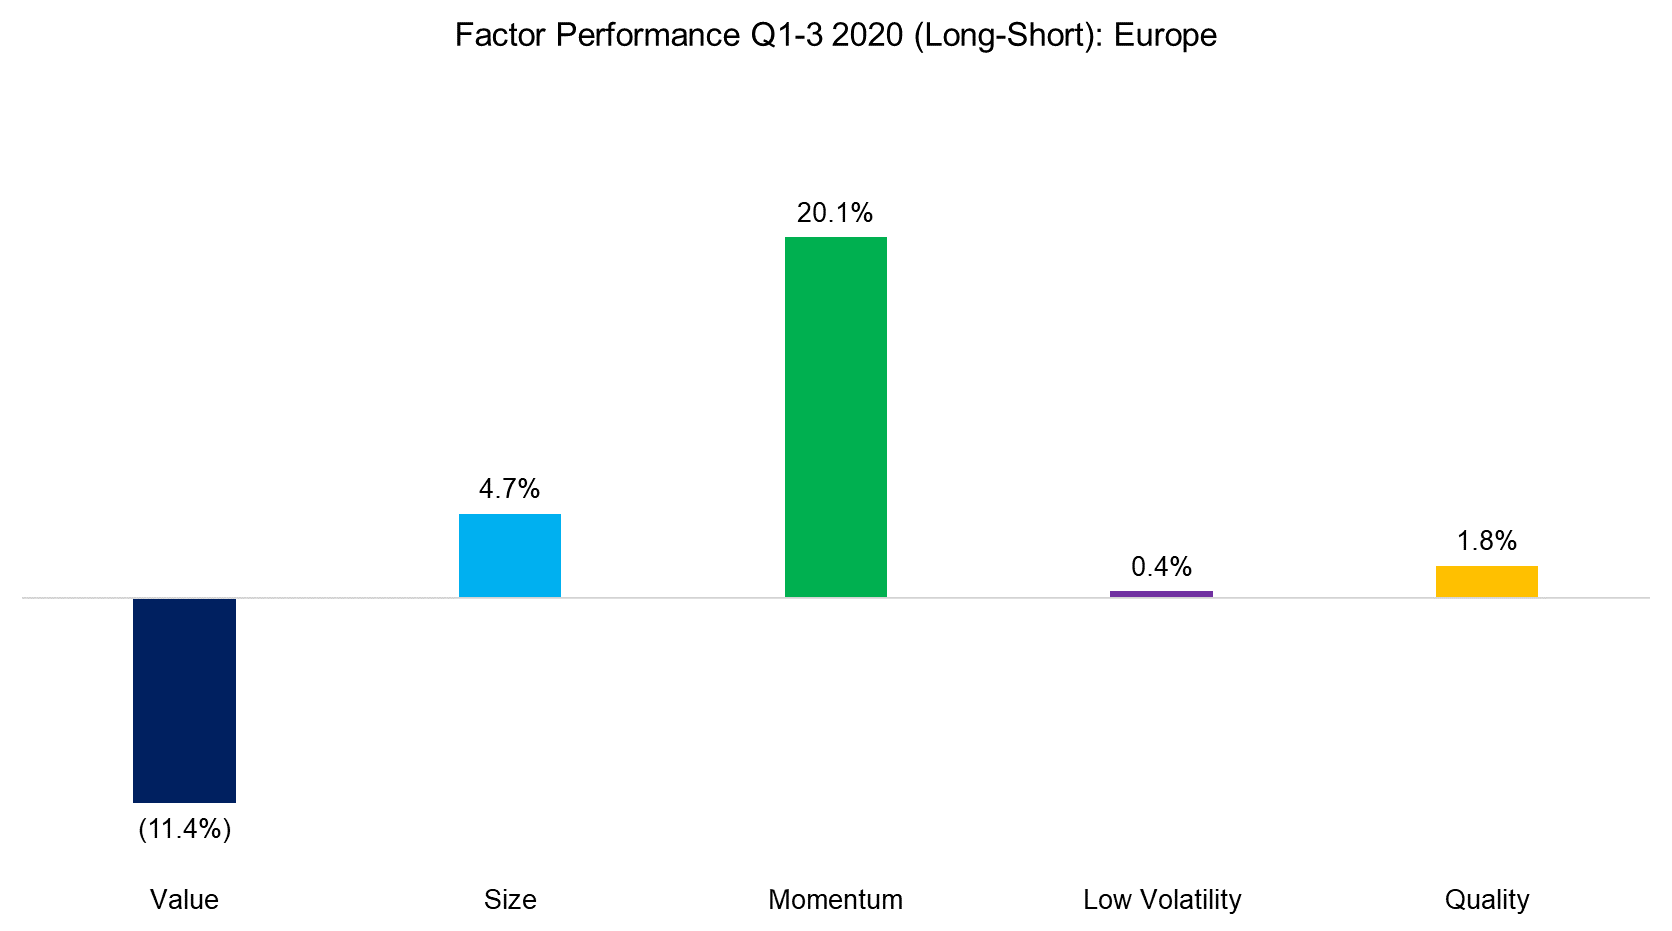 Factor Performance Q1-3 2020 (Long-Short) Europe